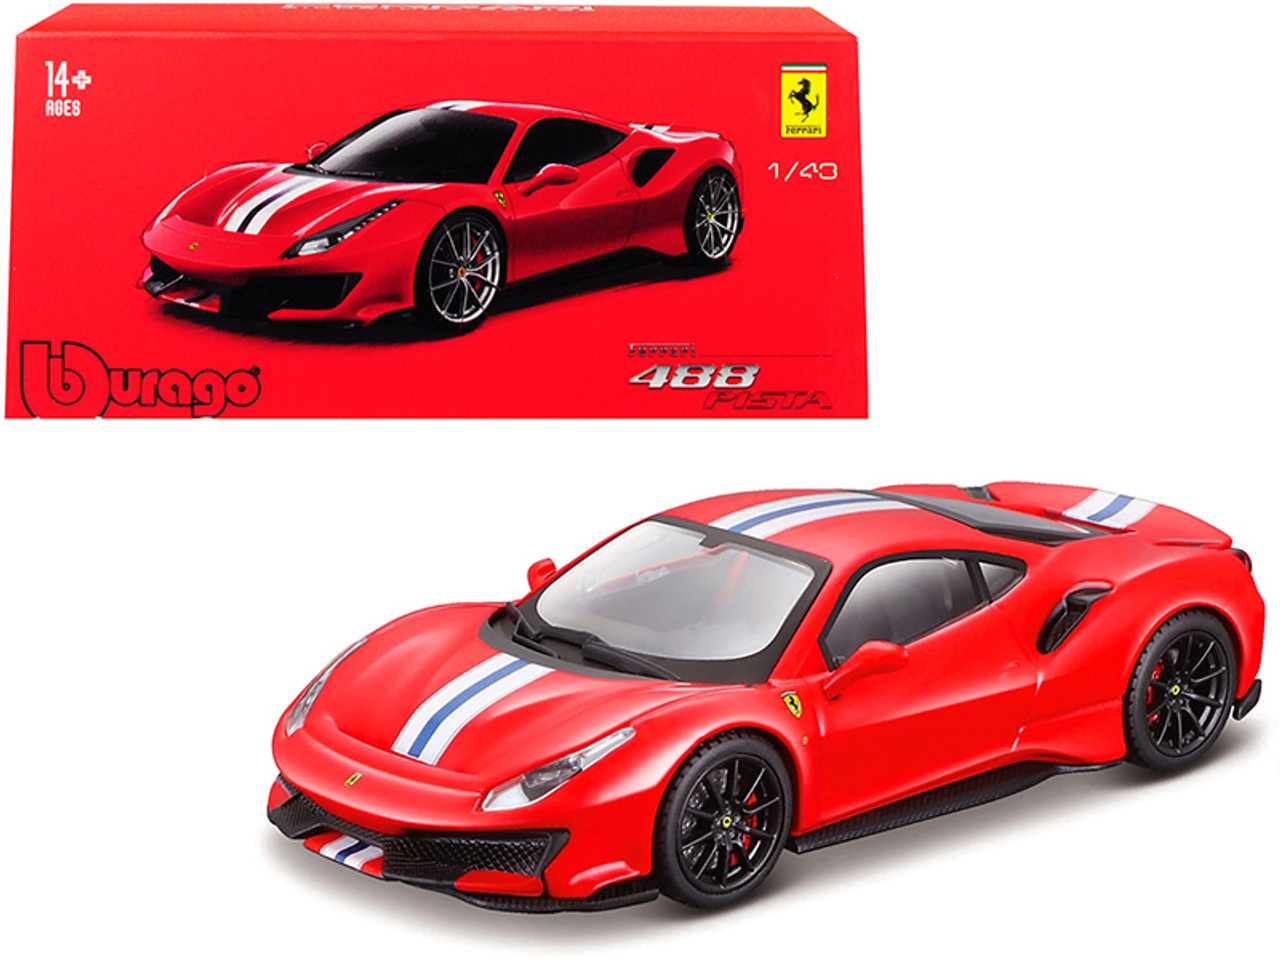 1:43 scale Ferrari 488 Pista Spider model